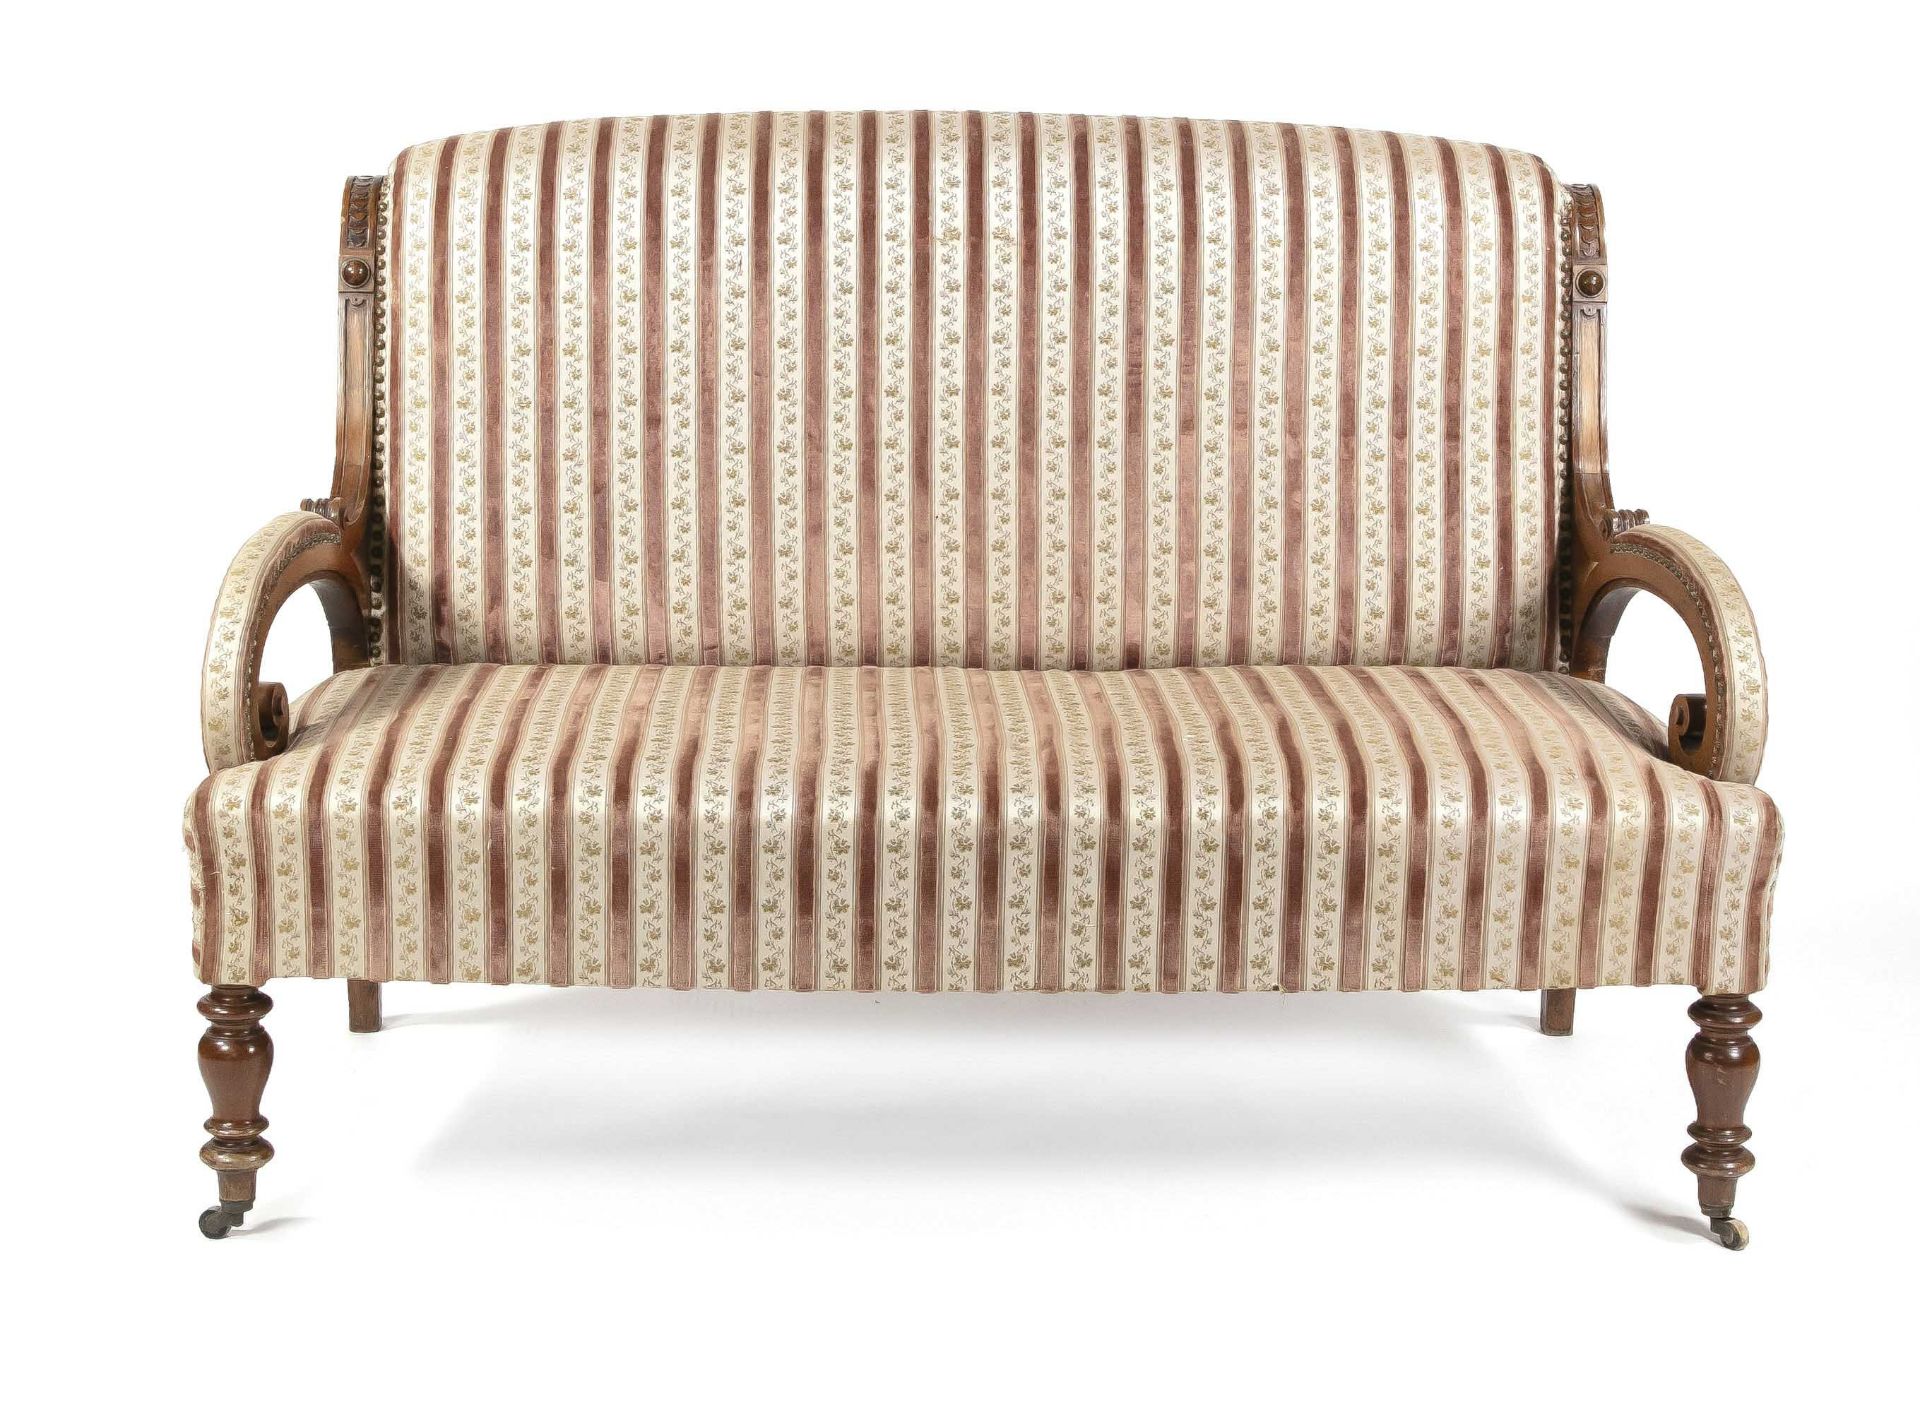 Founder's period sofa around 1880, solid walnut, matching lot 5515, 102 x 140 x 80 cm.- The